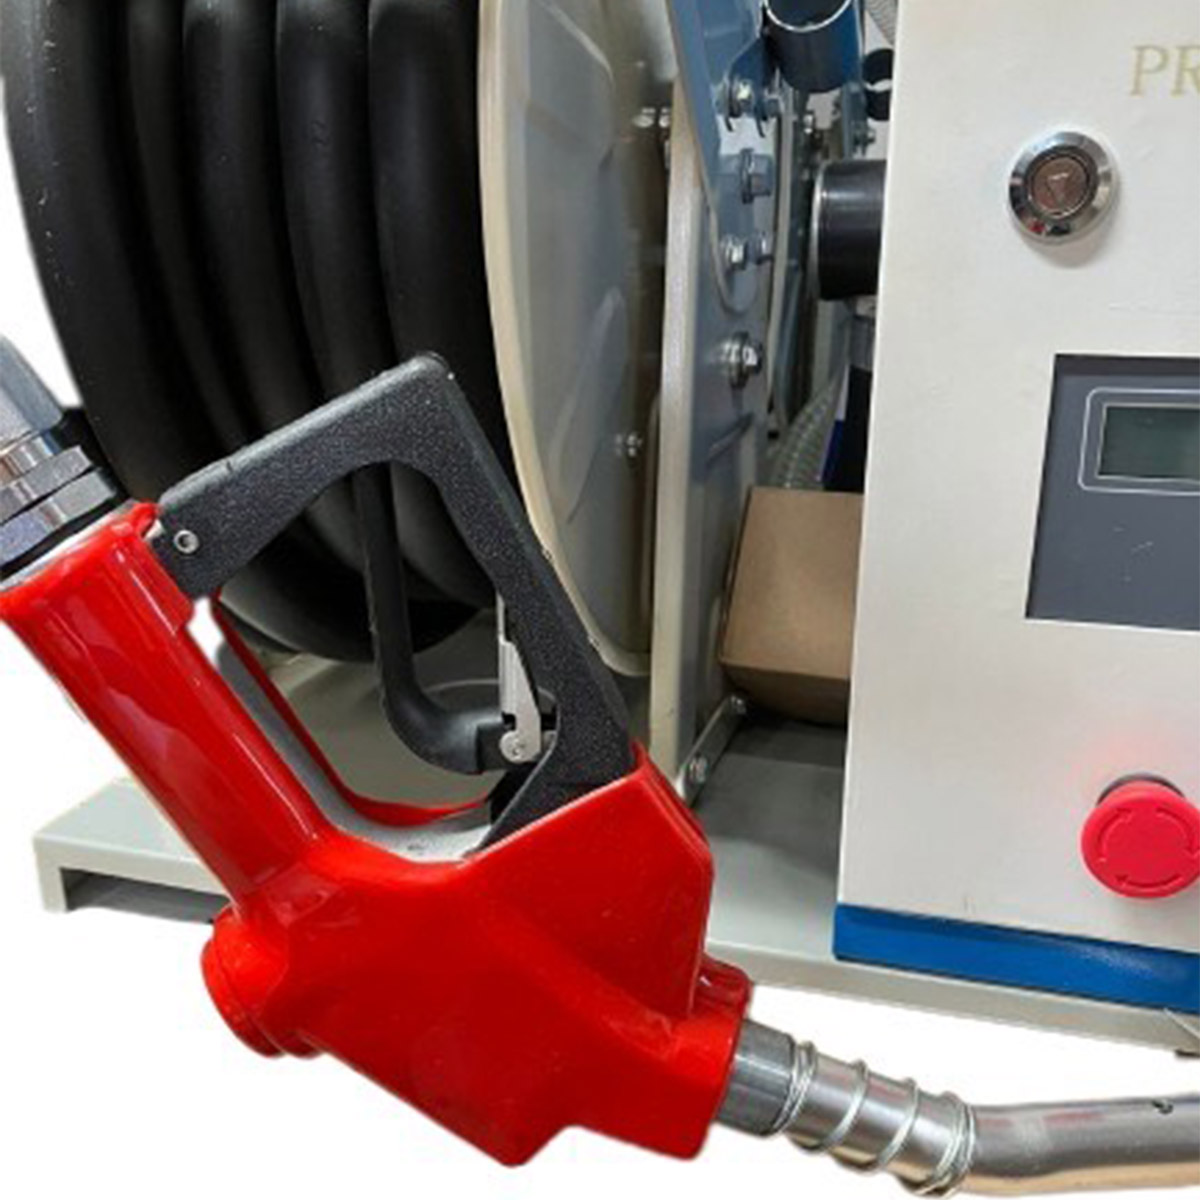 Dispanzer pumpa za dizel gorivo ili naftu 20-80 lit min